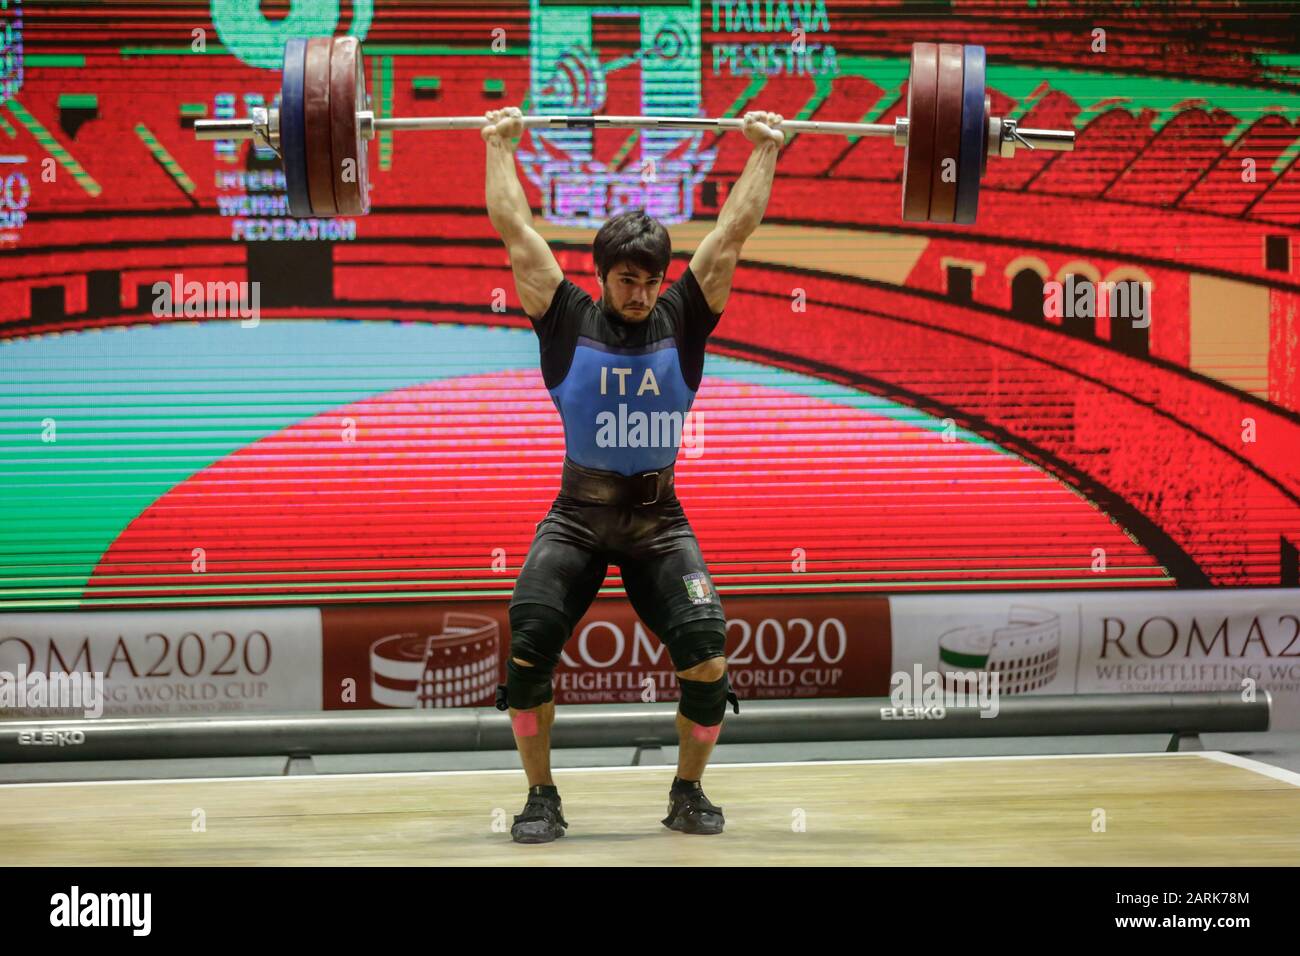 Esposito salvatore (ita) catégorie 73 kg lors de la coupe du monde IWF Weightlifting 2020, Rome, Italie, 28 Jan 2020, Sports Weightlifting Banque D'Images